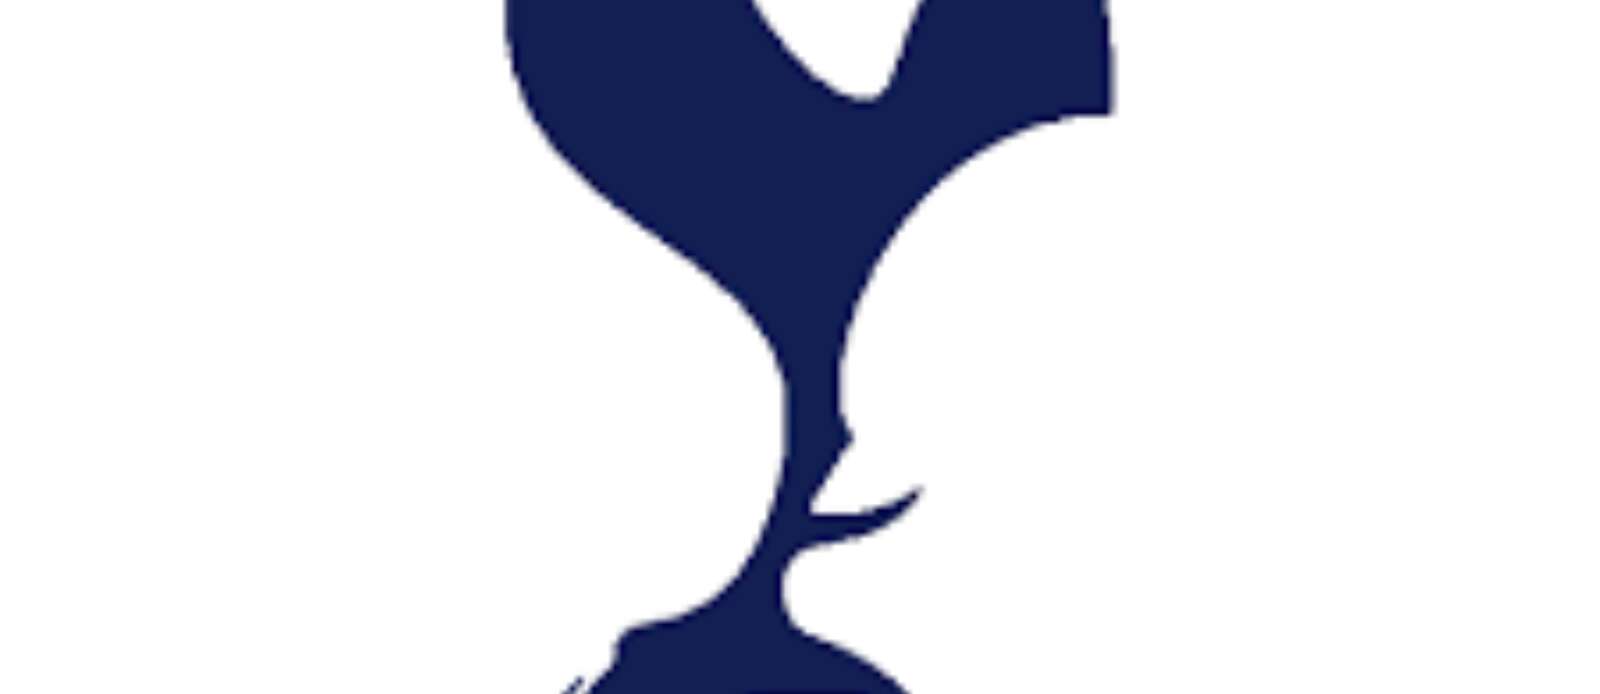 Tottenham Hotspur Foundation Coach Header Image.